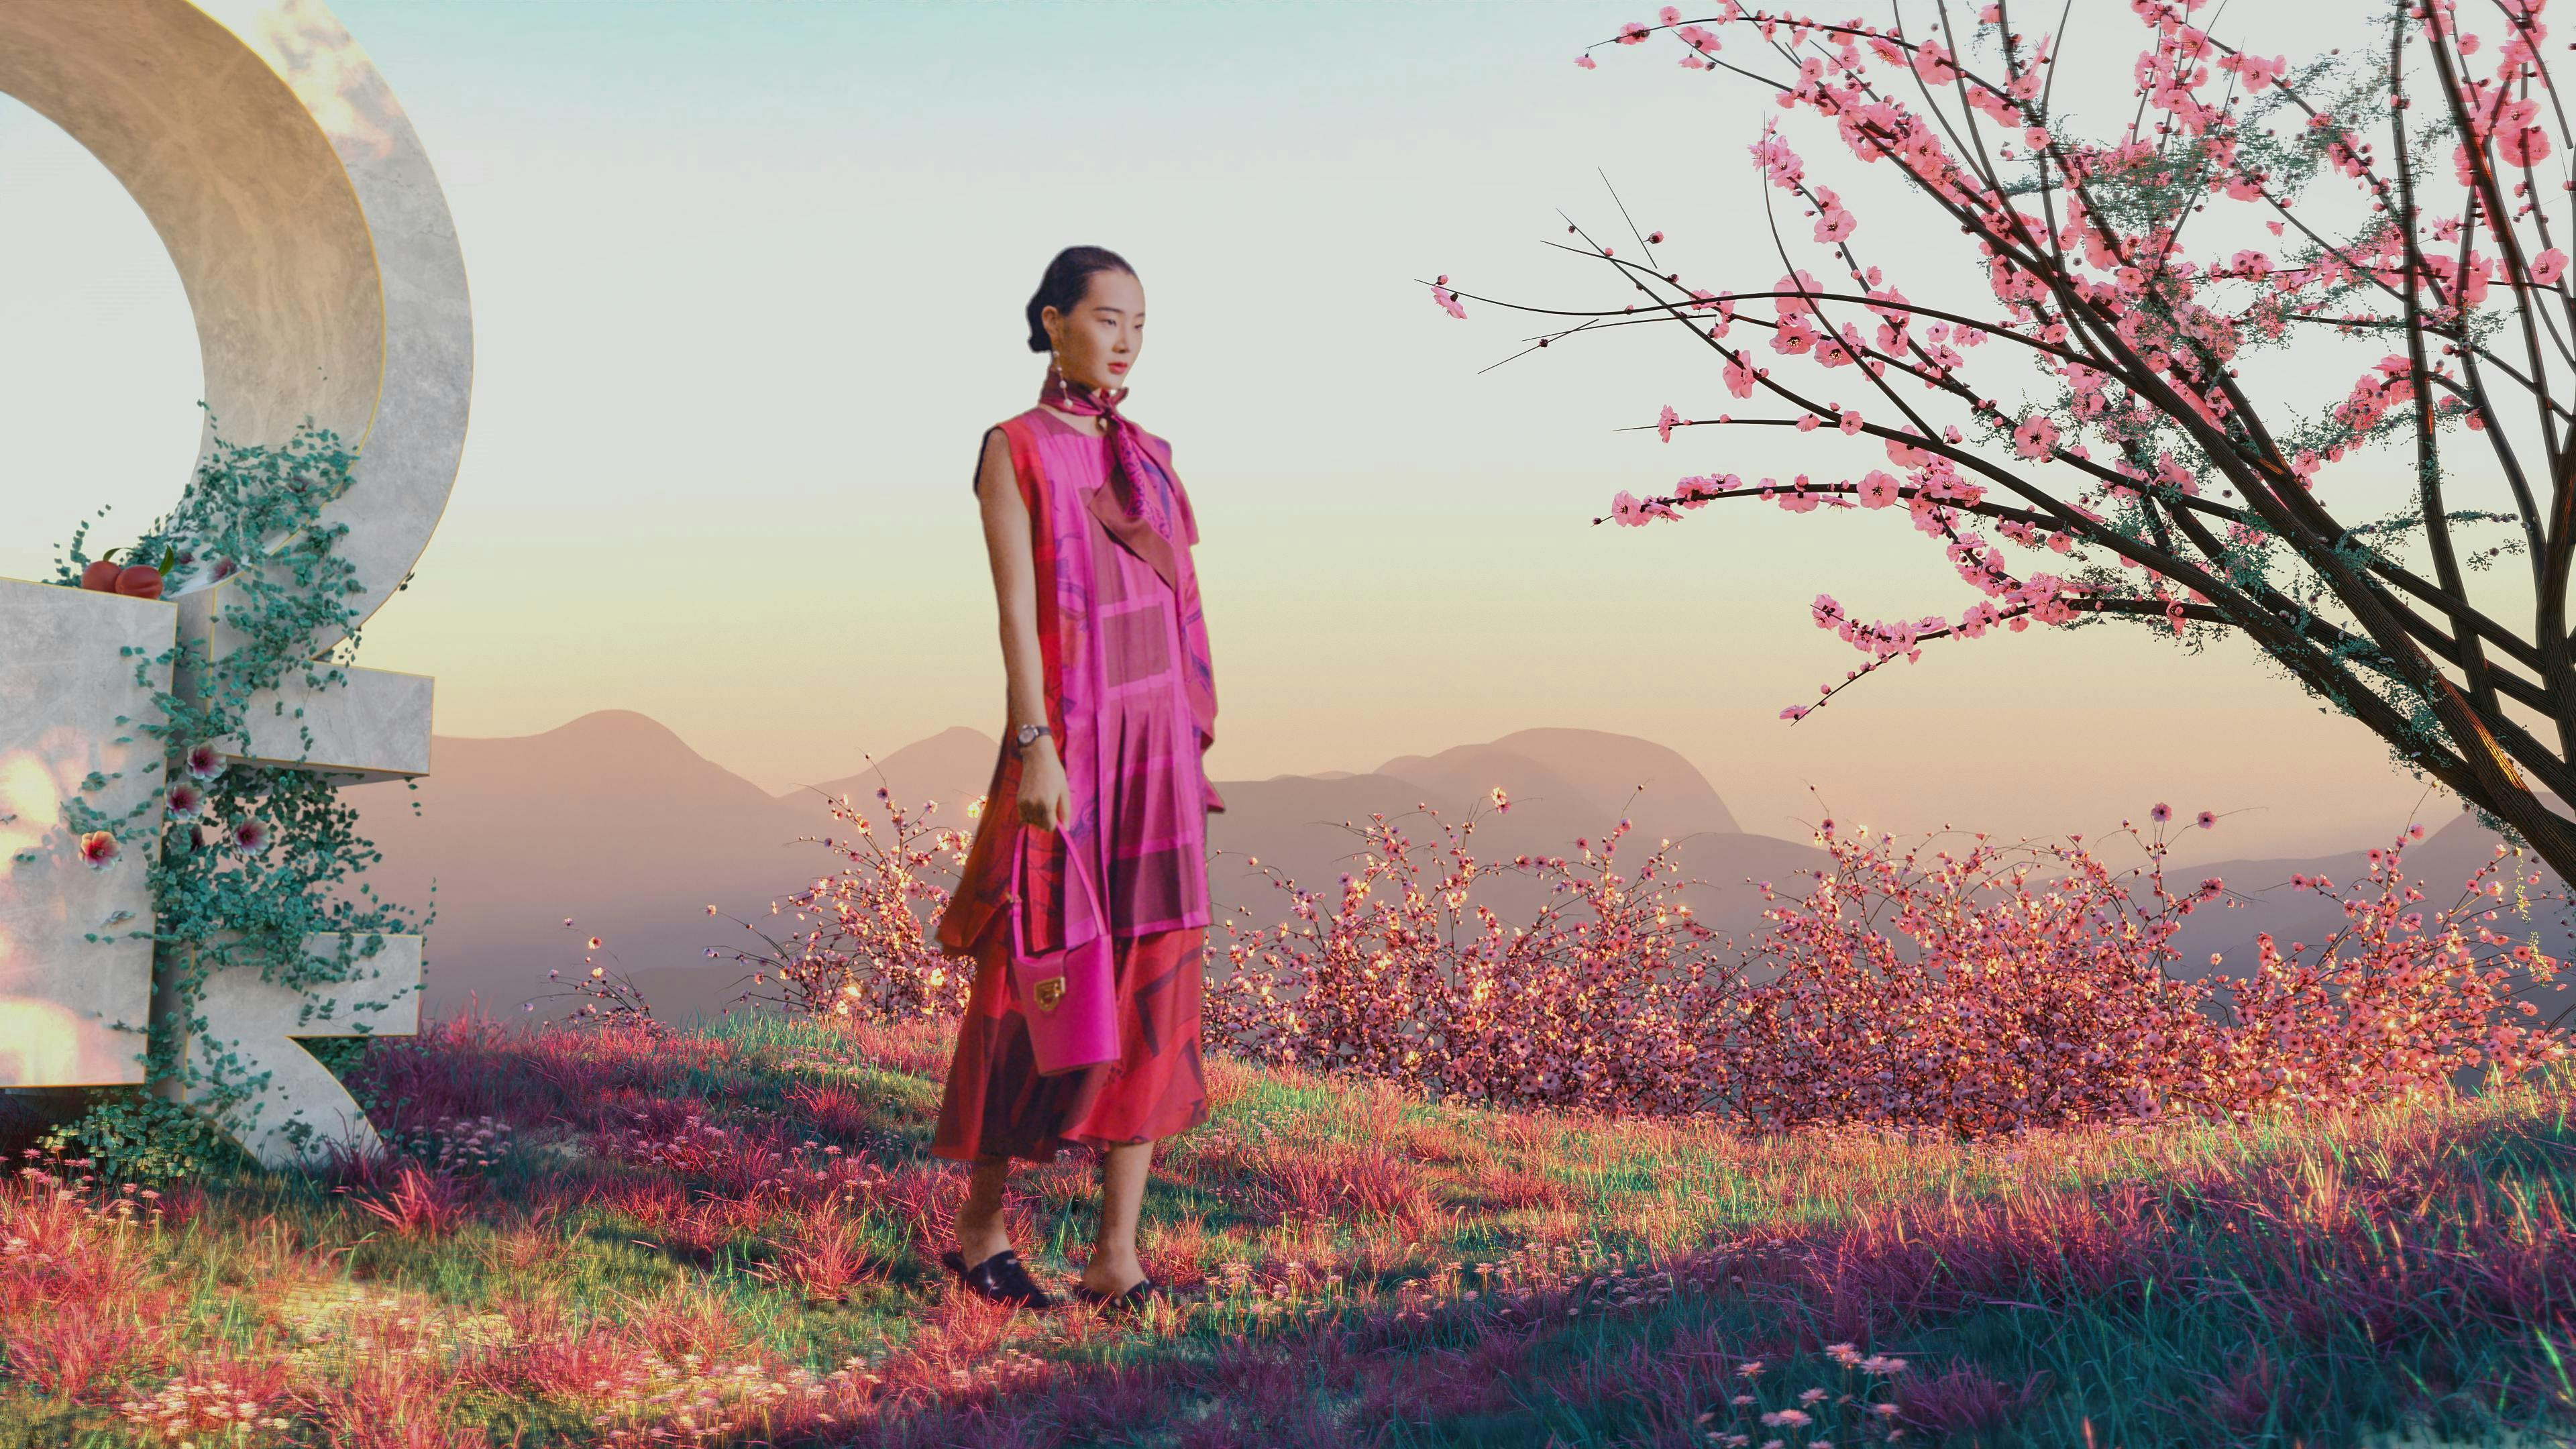 clothing apparel person human plant petal flower blossom outdoors vegetation